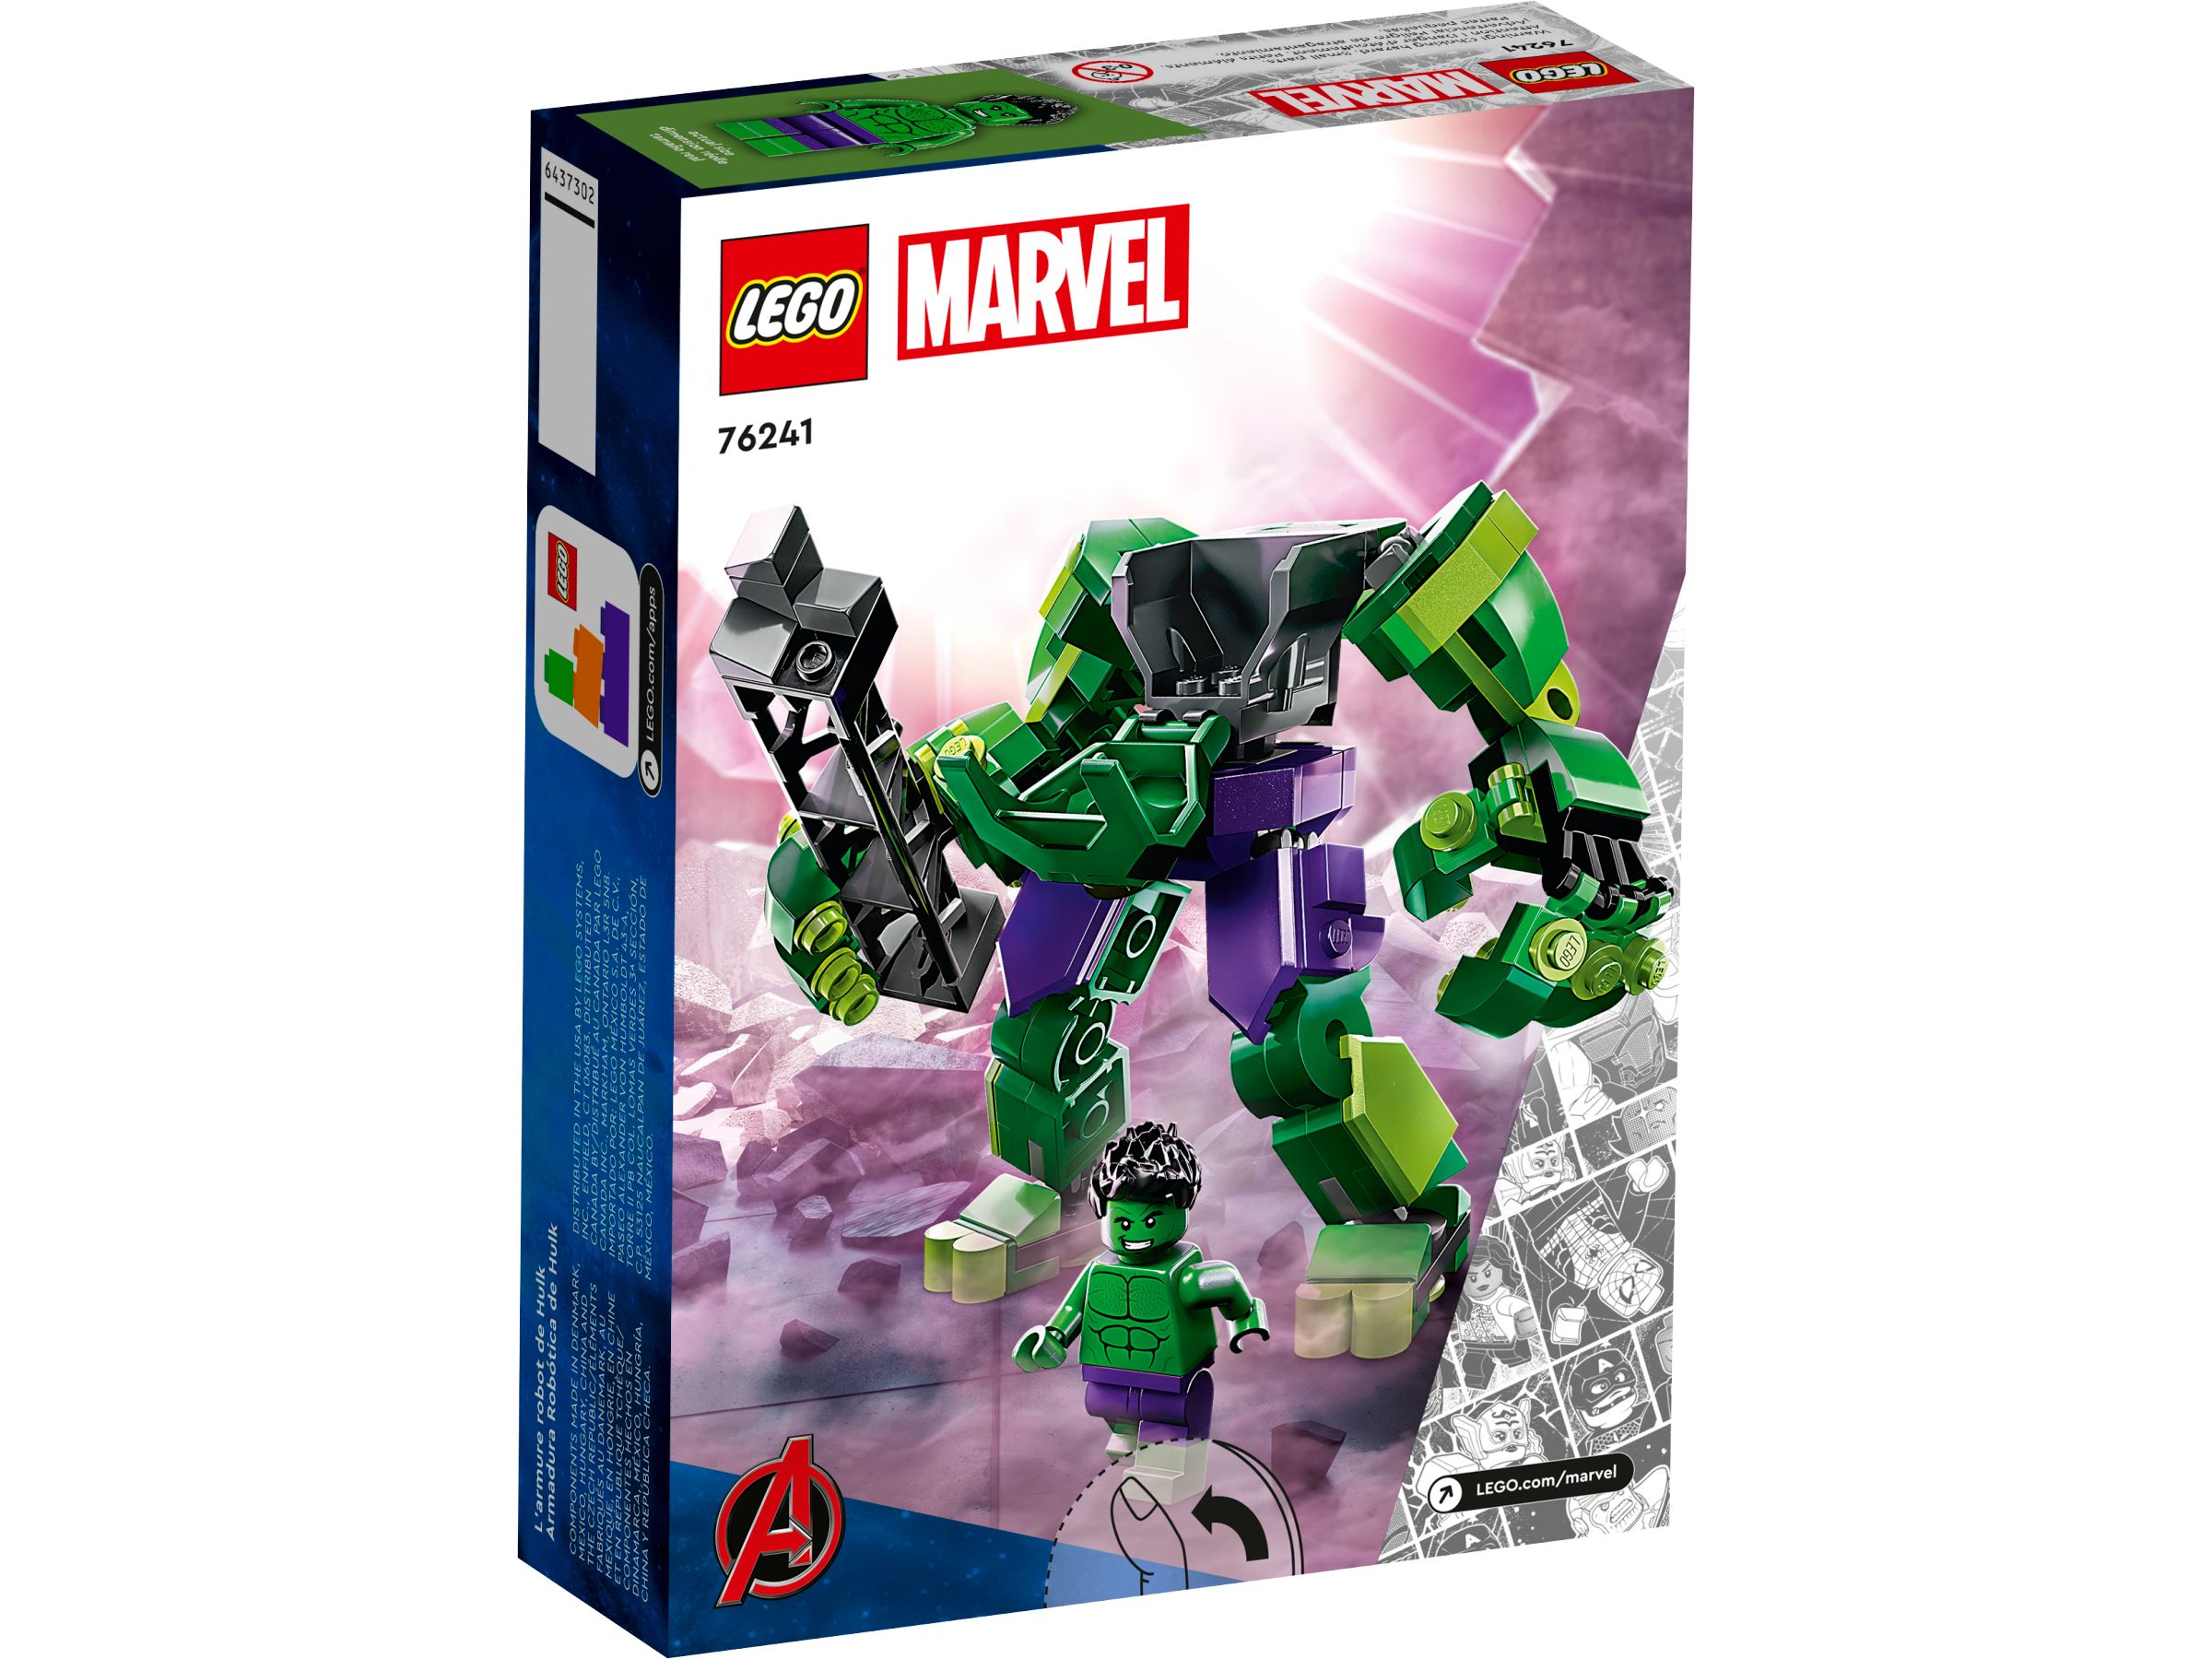 LEGO Super Heroes 76241 Hulk Mech LEGO_76241_alt5.jpg